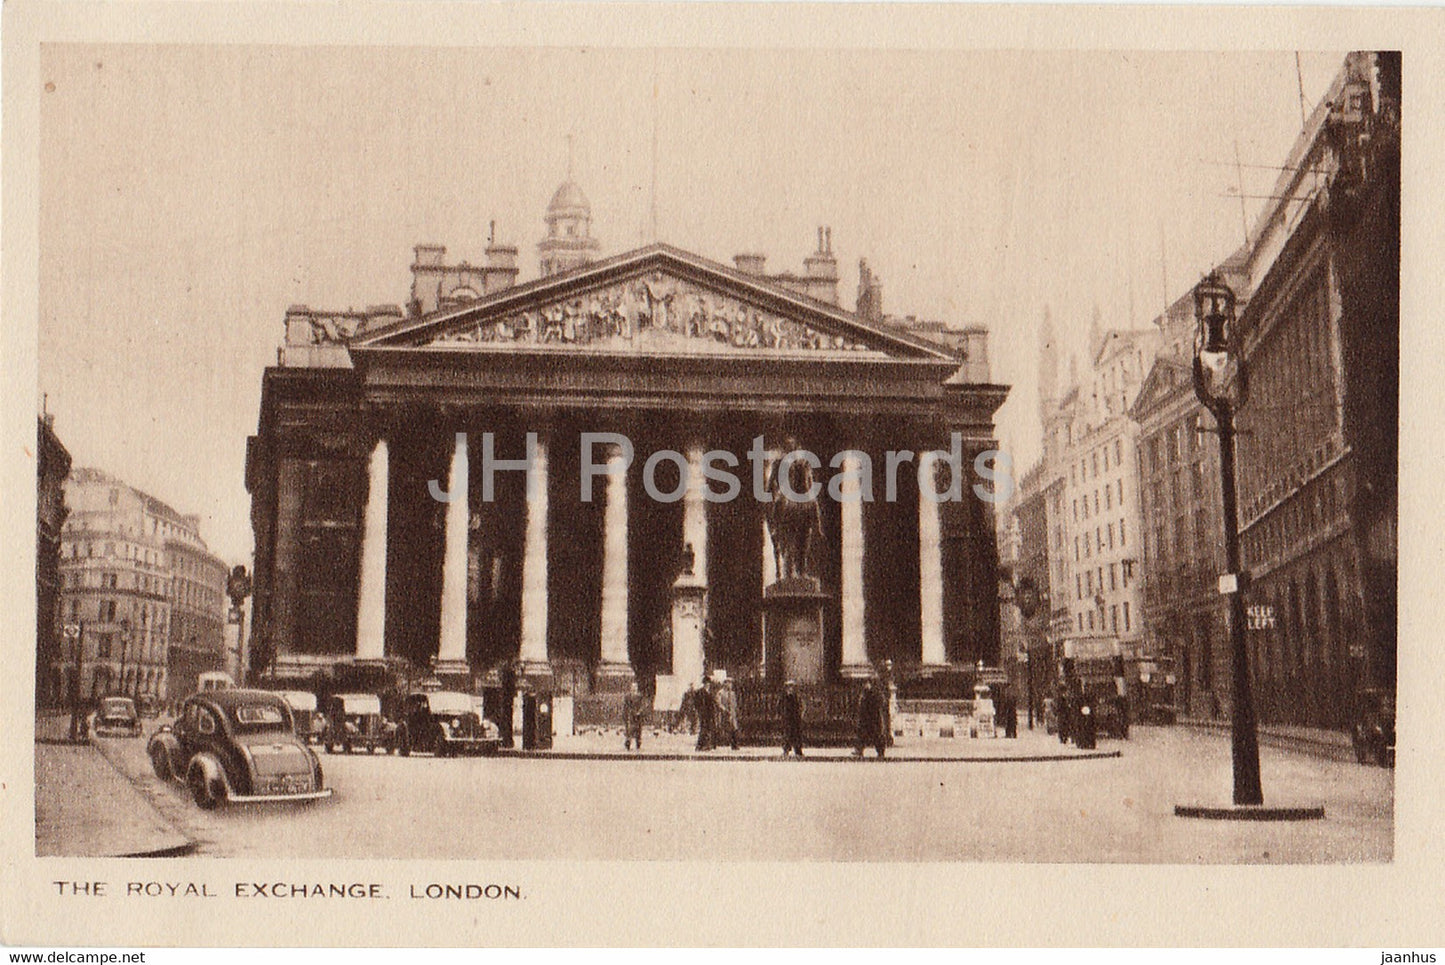 London - The Royal Exchange - car - old postcard - England - United Kingdom - unused - JH Postcards